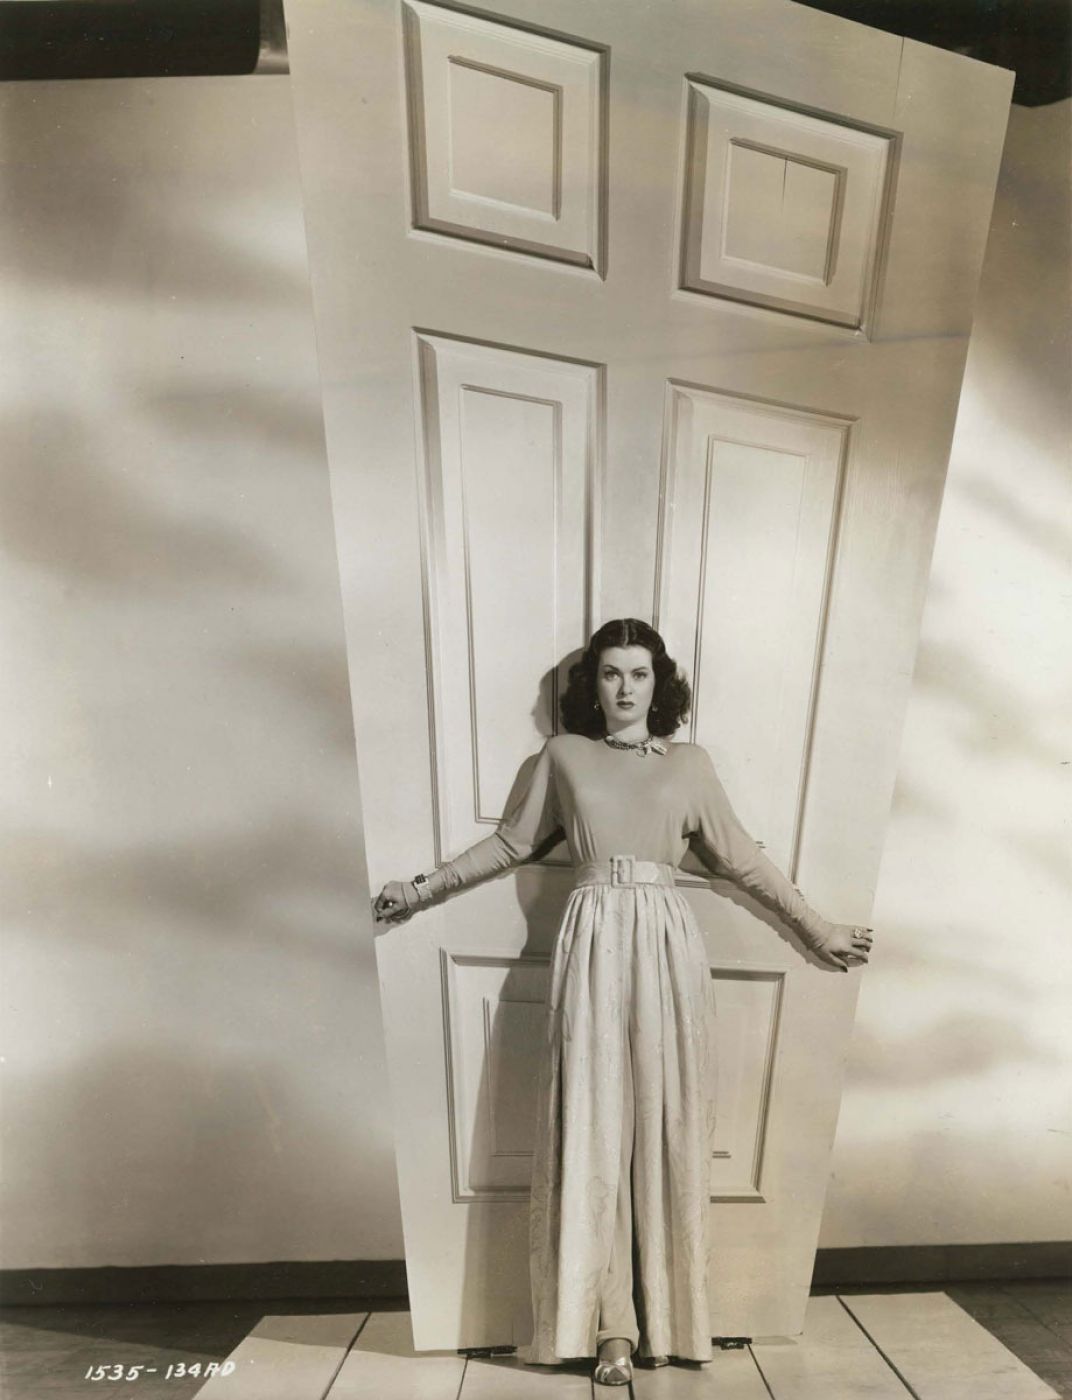 Anonymous, “Joan Bennett in “Secret Beyond the Door..." by Fritz Lang”, 1947